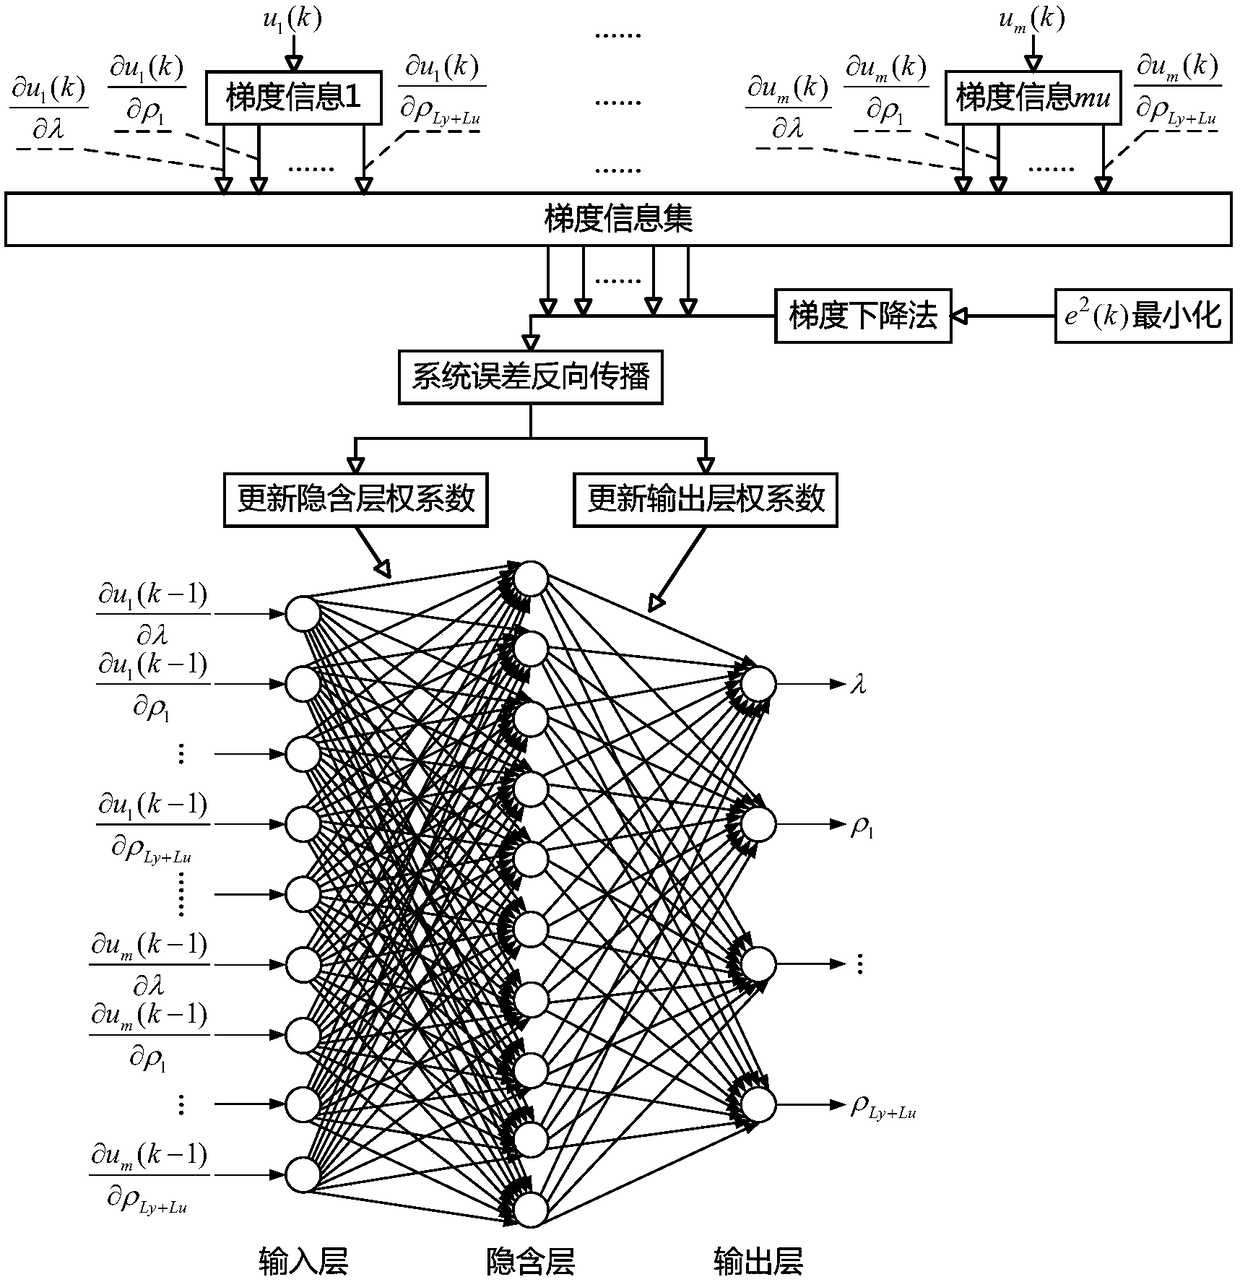 Parameter self-setting method of MISO full format model-free controller based on deviation information